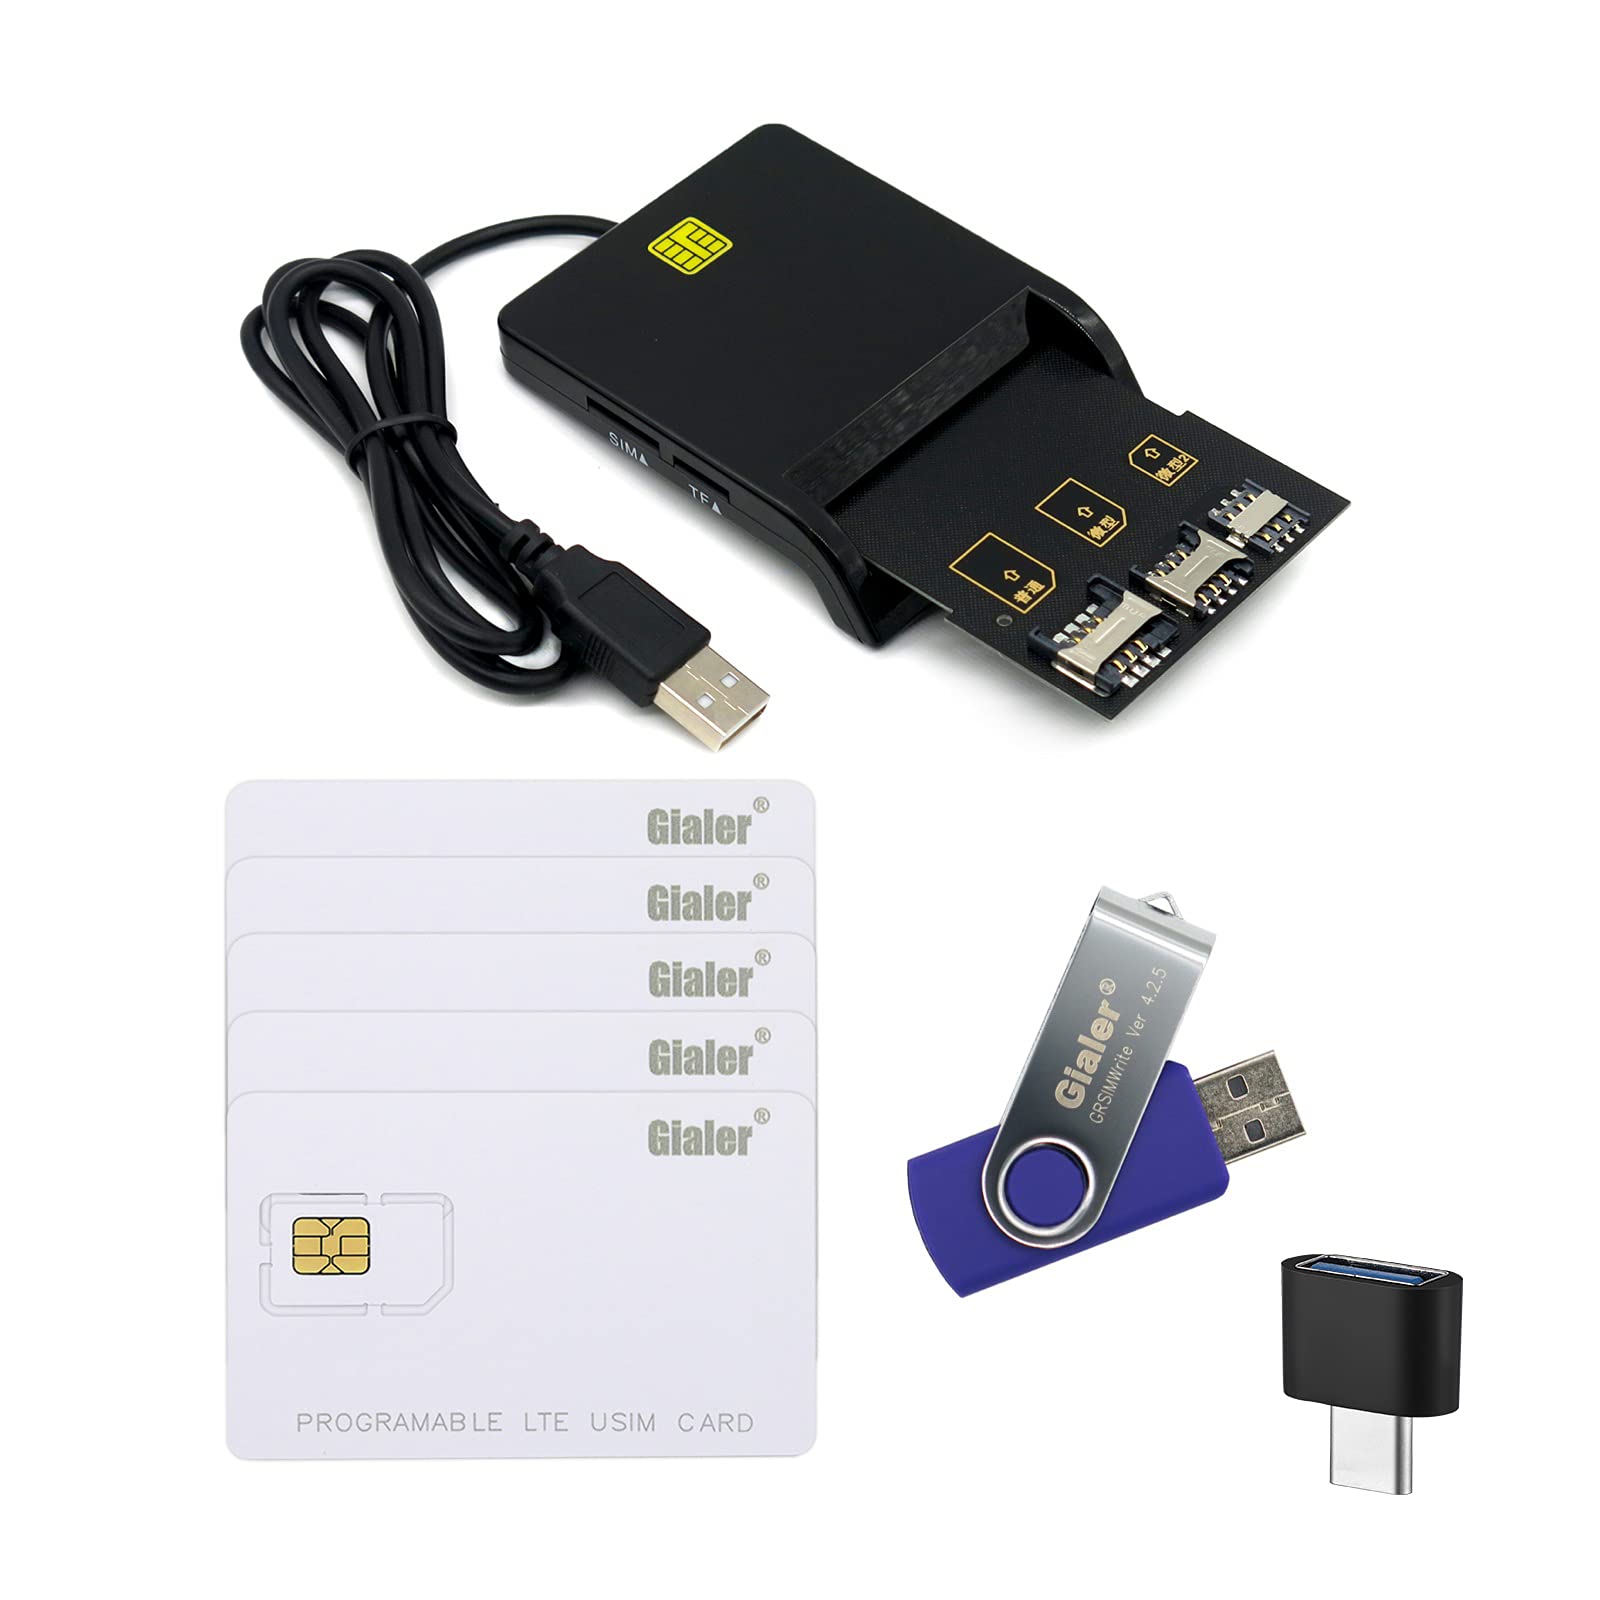 Gialer SIM Card Program kit, SIM Card Tools & Accessories 1 Card Reader + 5pcs USIM Cards + 3 in 1 Adapter kit + Newest GRSIMWrite software